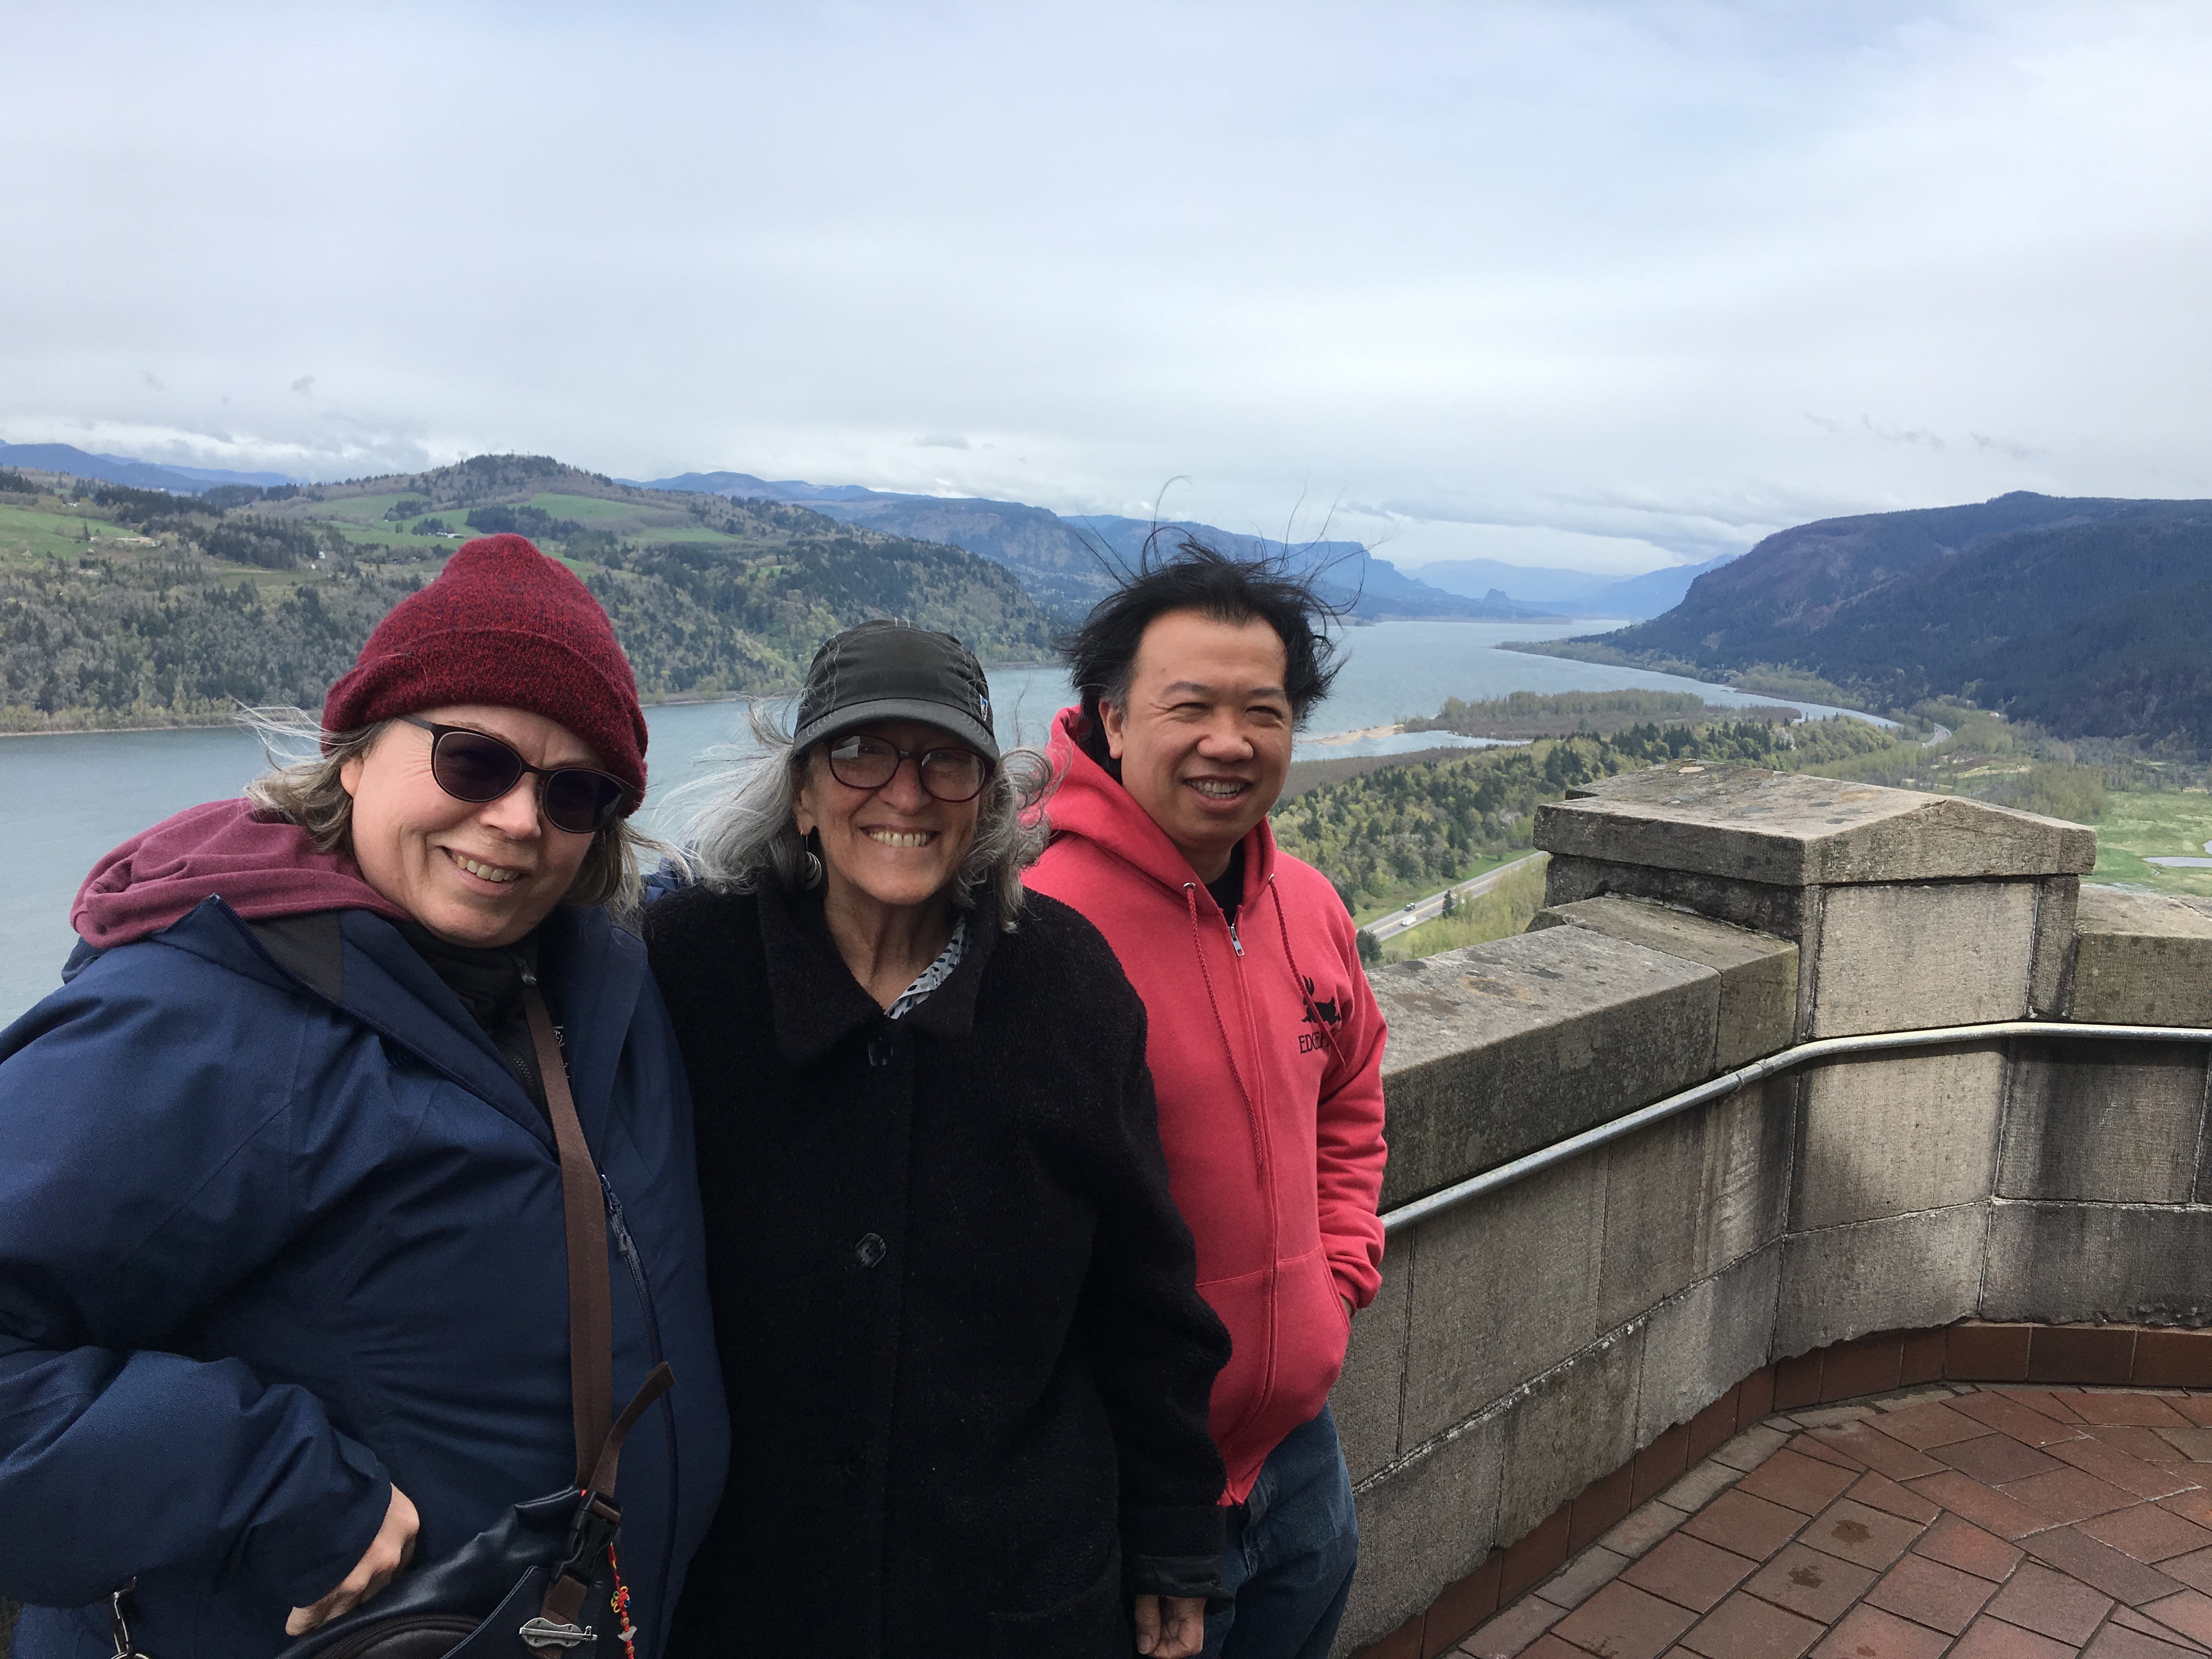 
Joellen visiting Patricia and Wayne. Columbia Gorge, OR (April 2018)